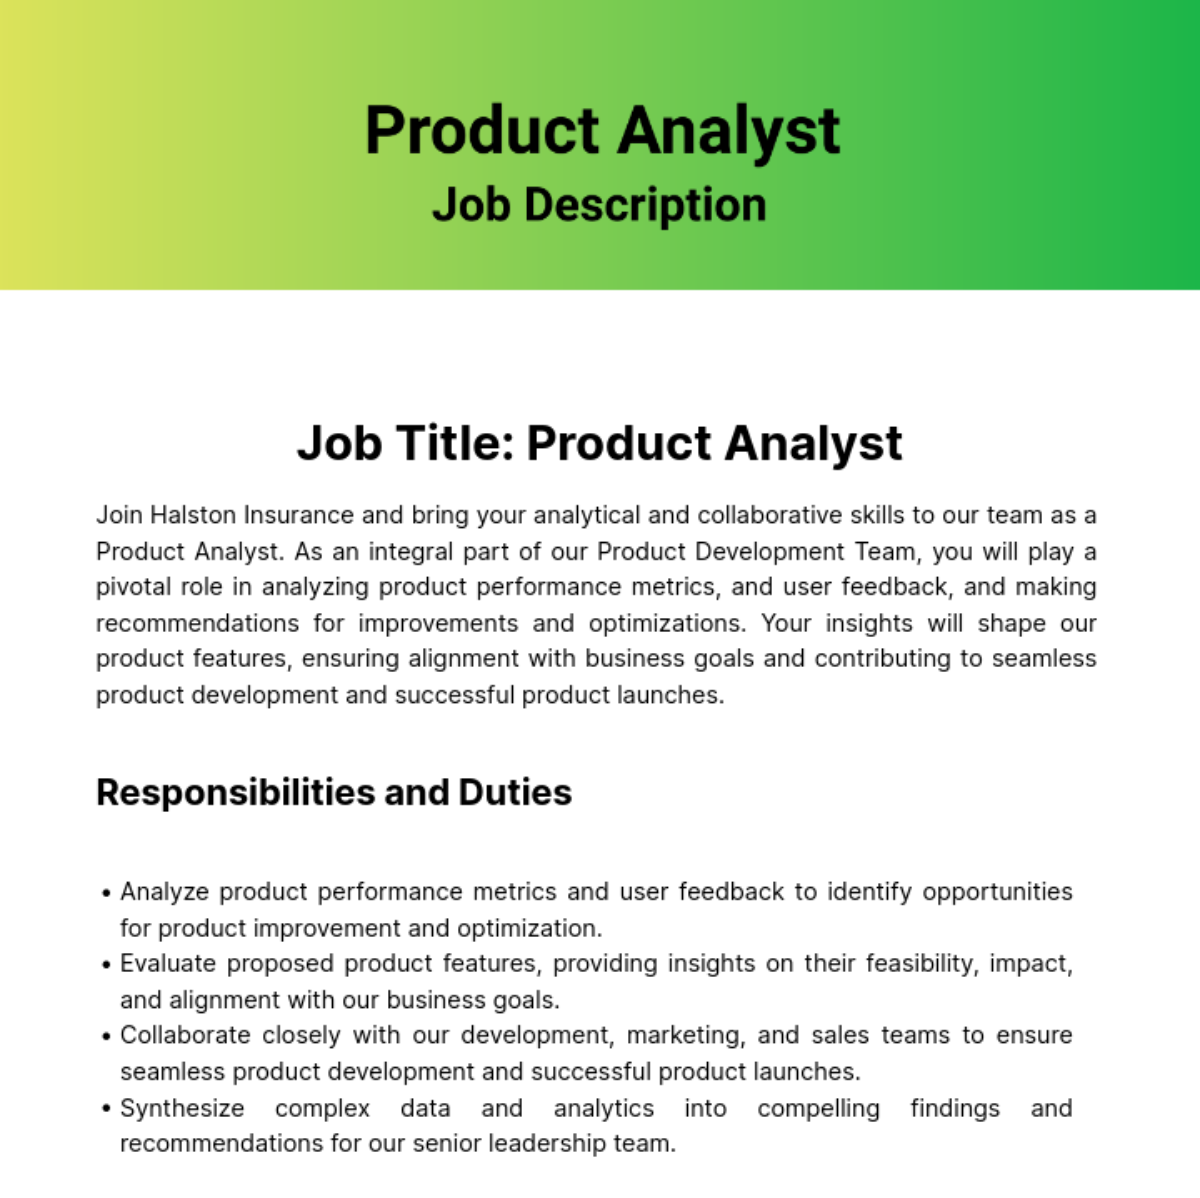 Product Analyst Job Description Template